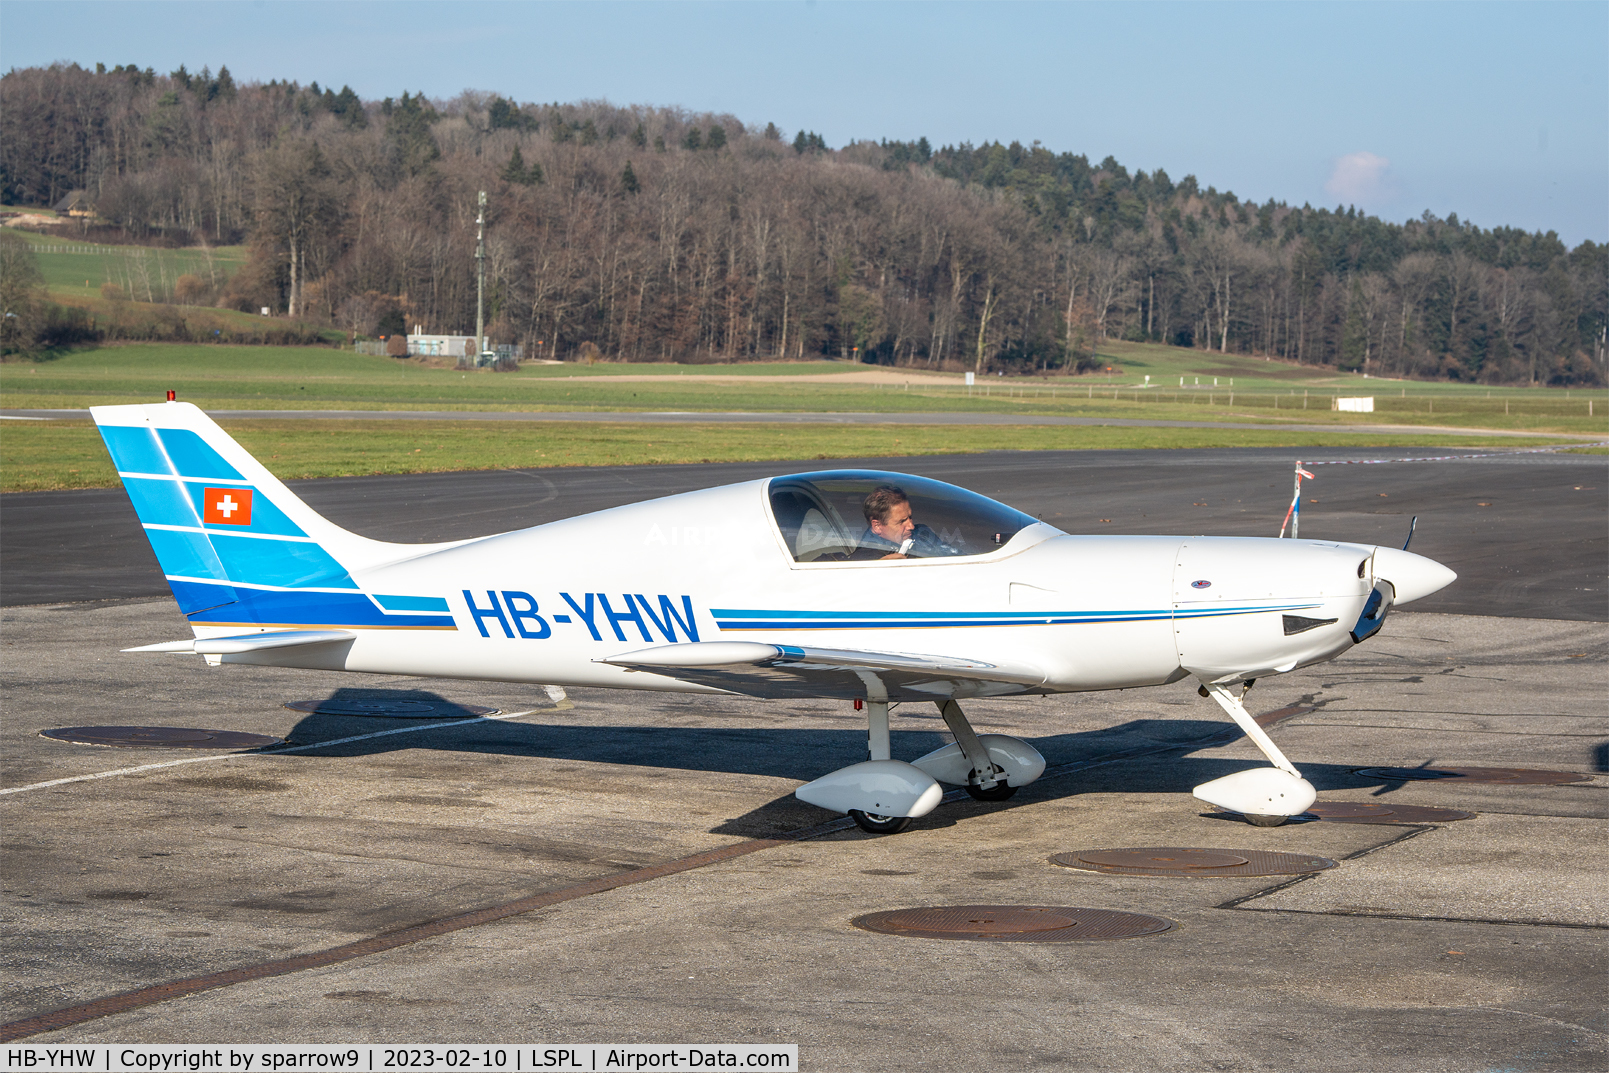 HB-YHW, 1998 Aero Designs Pulsar C/N 287, Just landed at Langenthal-Bleienbach